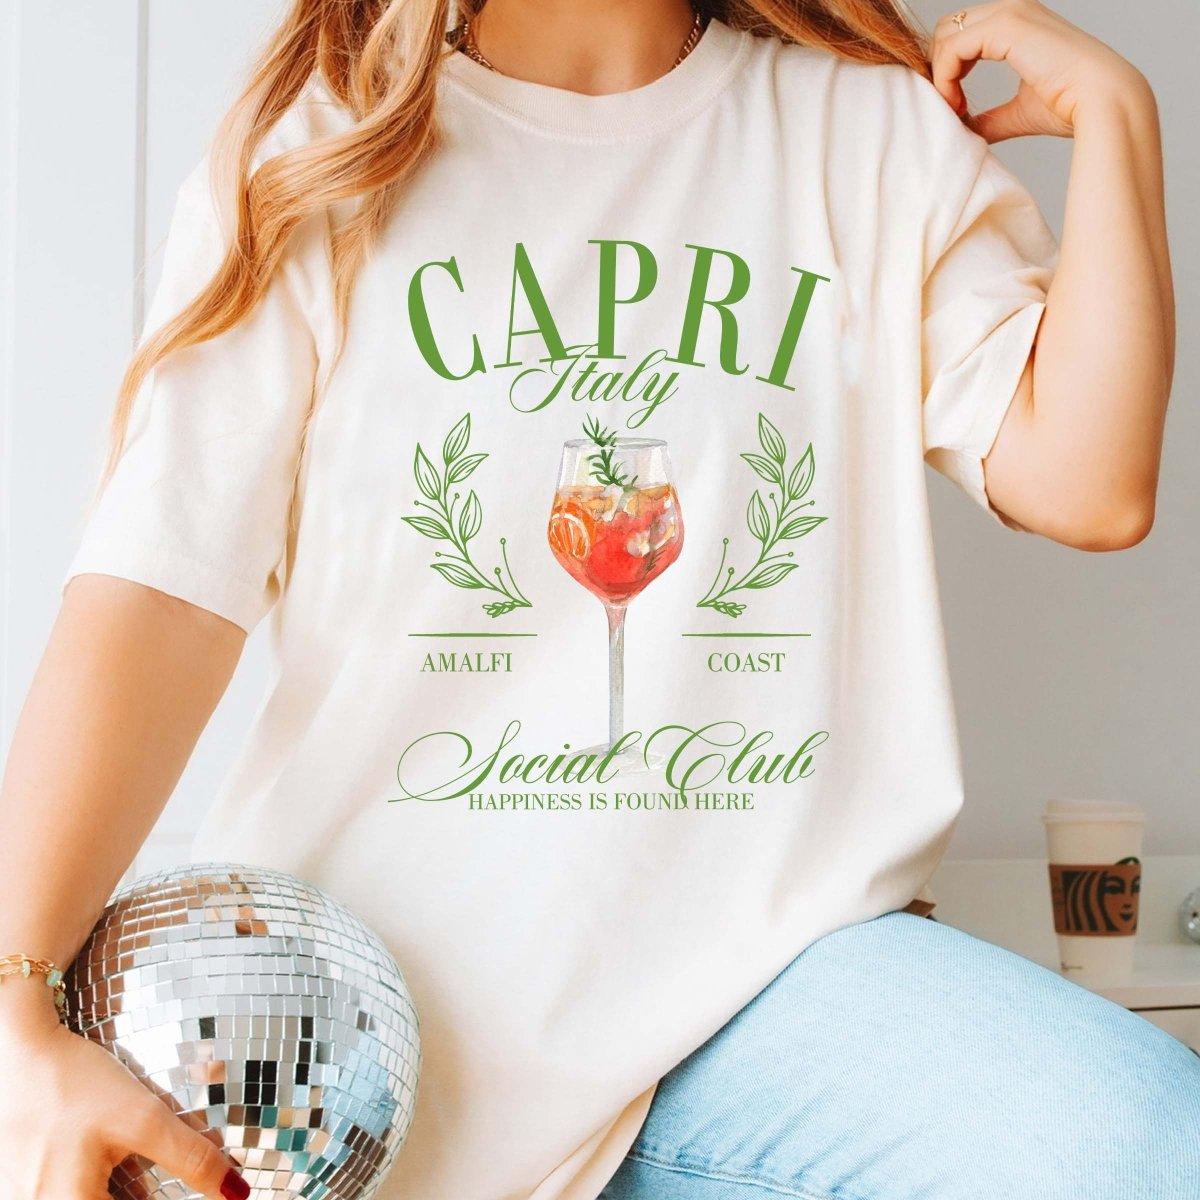 Capri Italy Social Club Wholesale Tee - Limeberry Designs